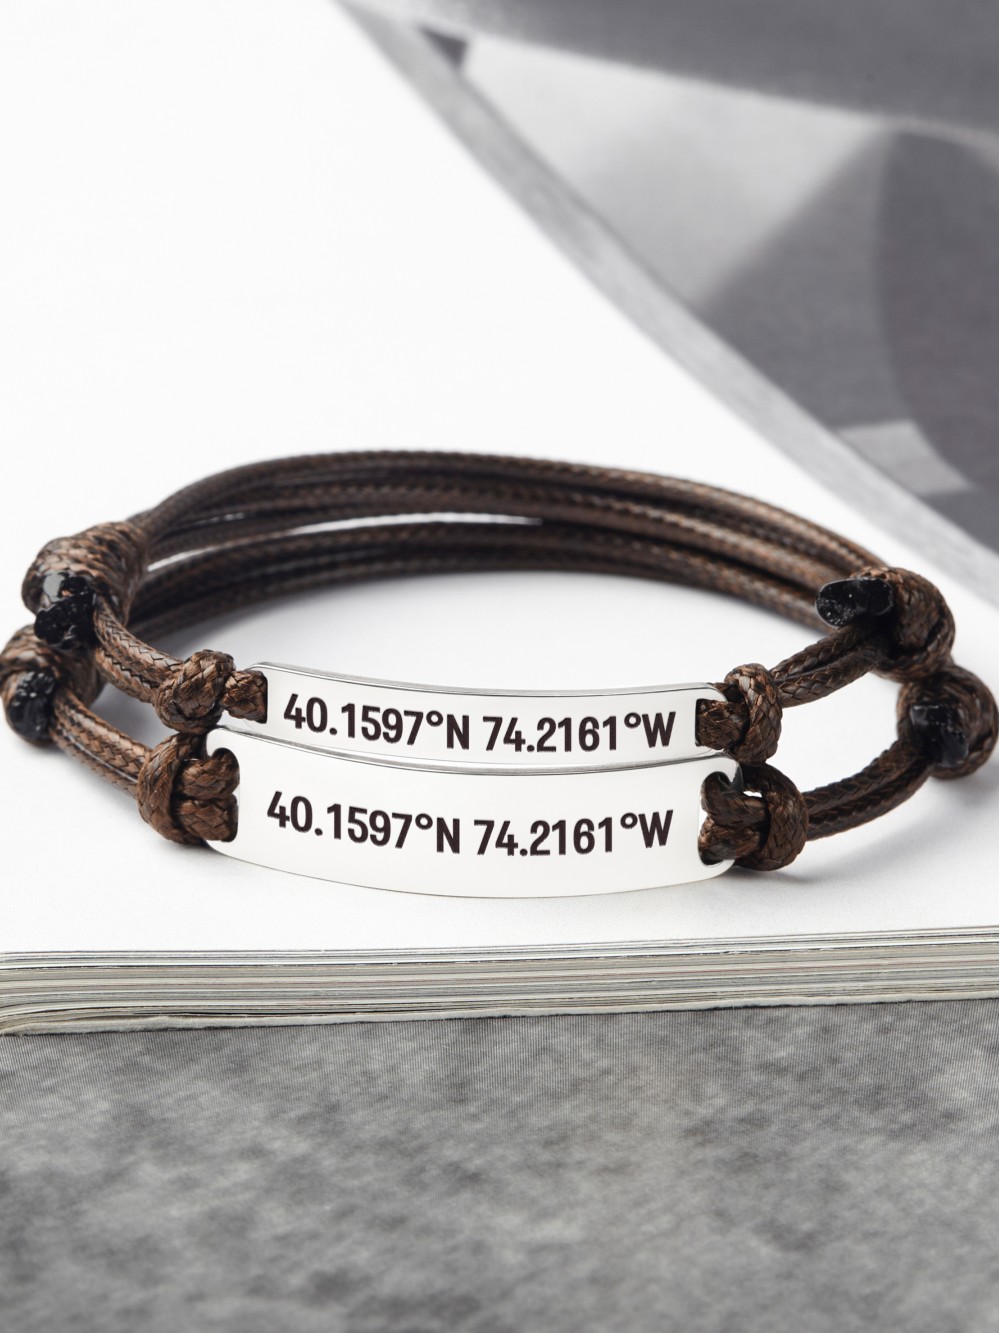 Matching Bracelets for Couples - Coordinates